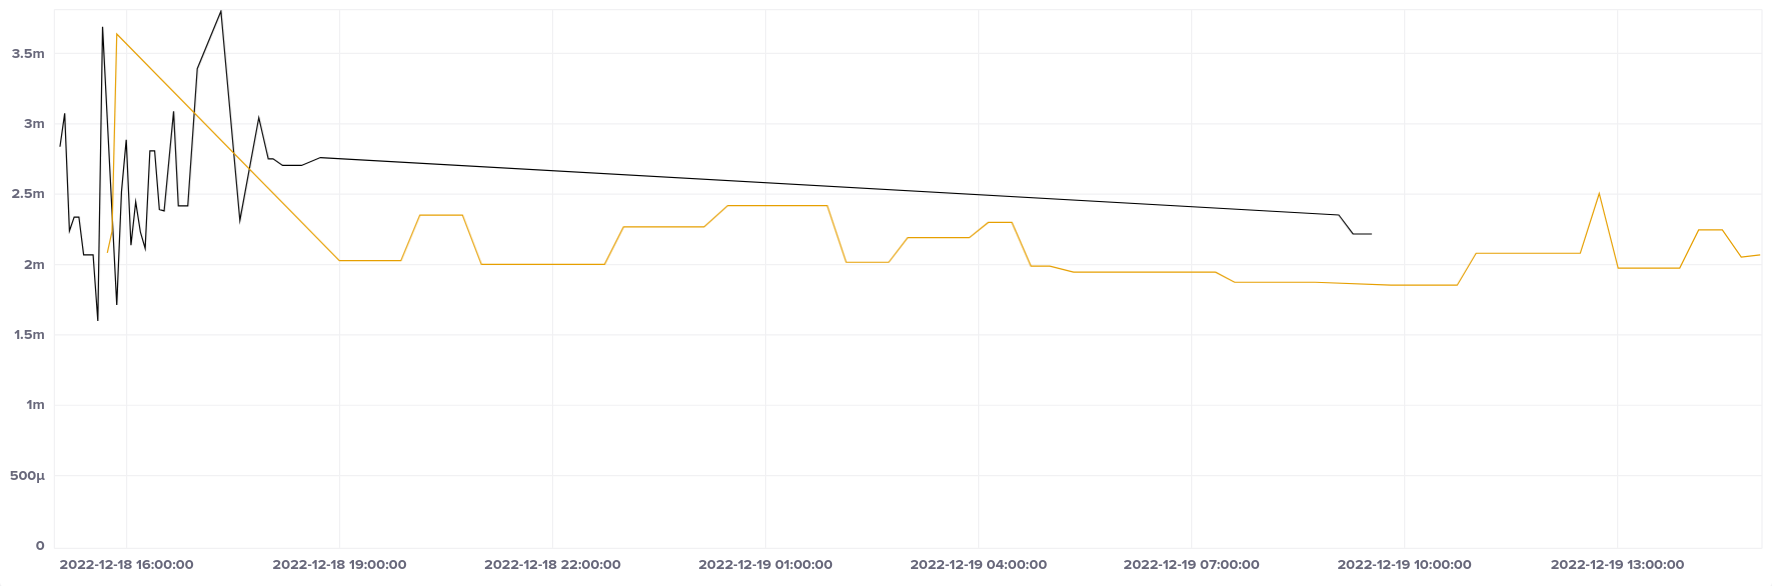 Graph of Azure App Service median root delay